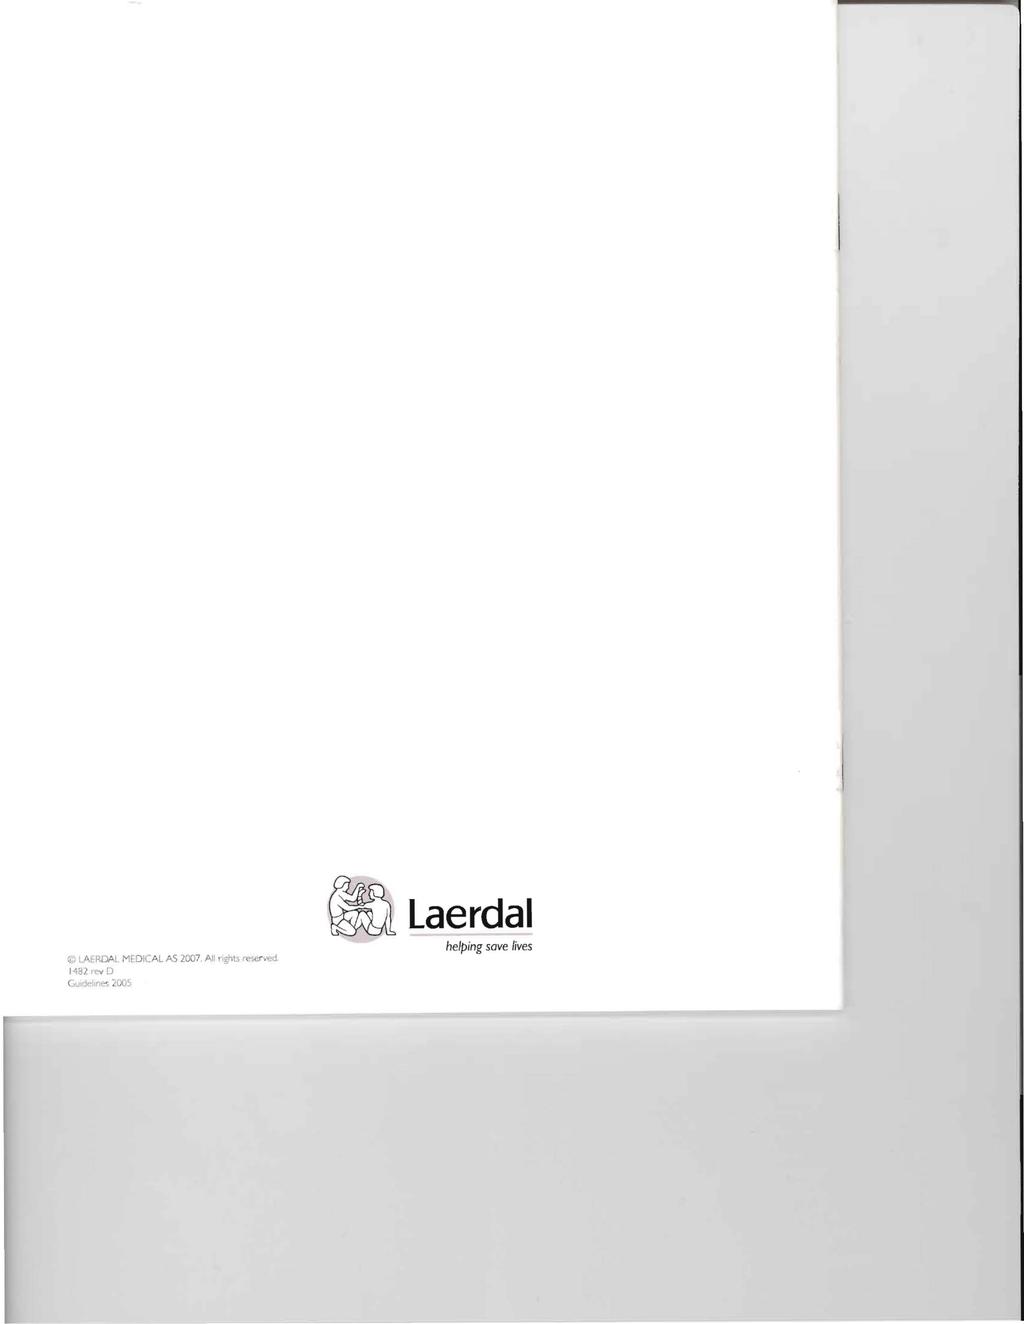 LAERDAL MWICAL AS 2007. All.